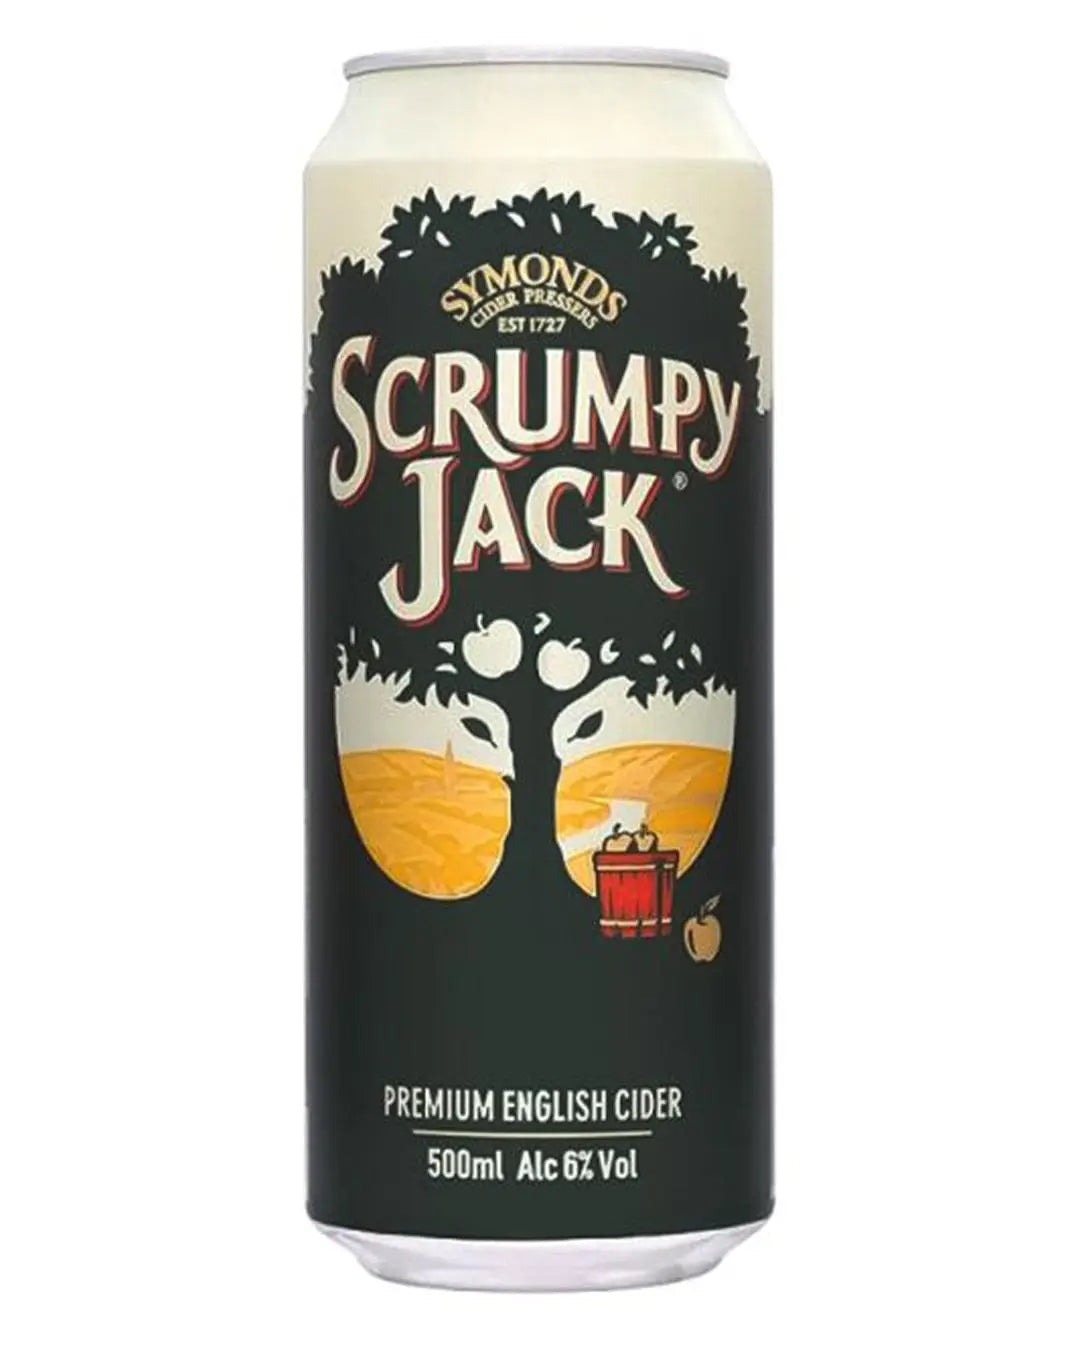 Scrumpy Jack Cider Cans, 500 ml Cider